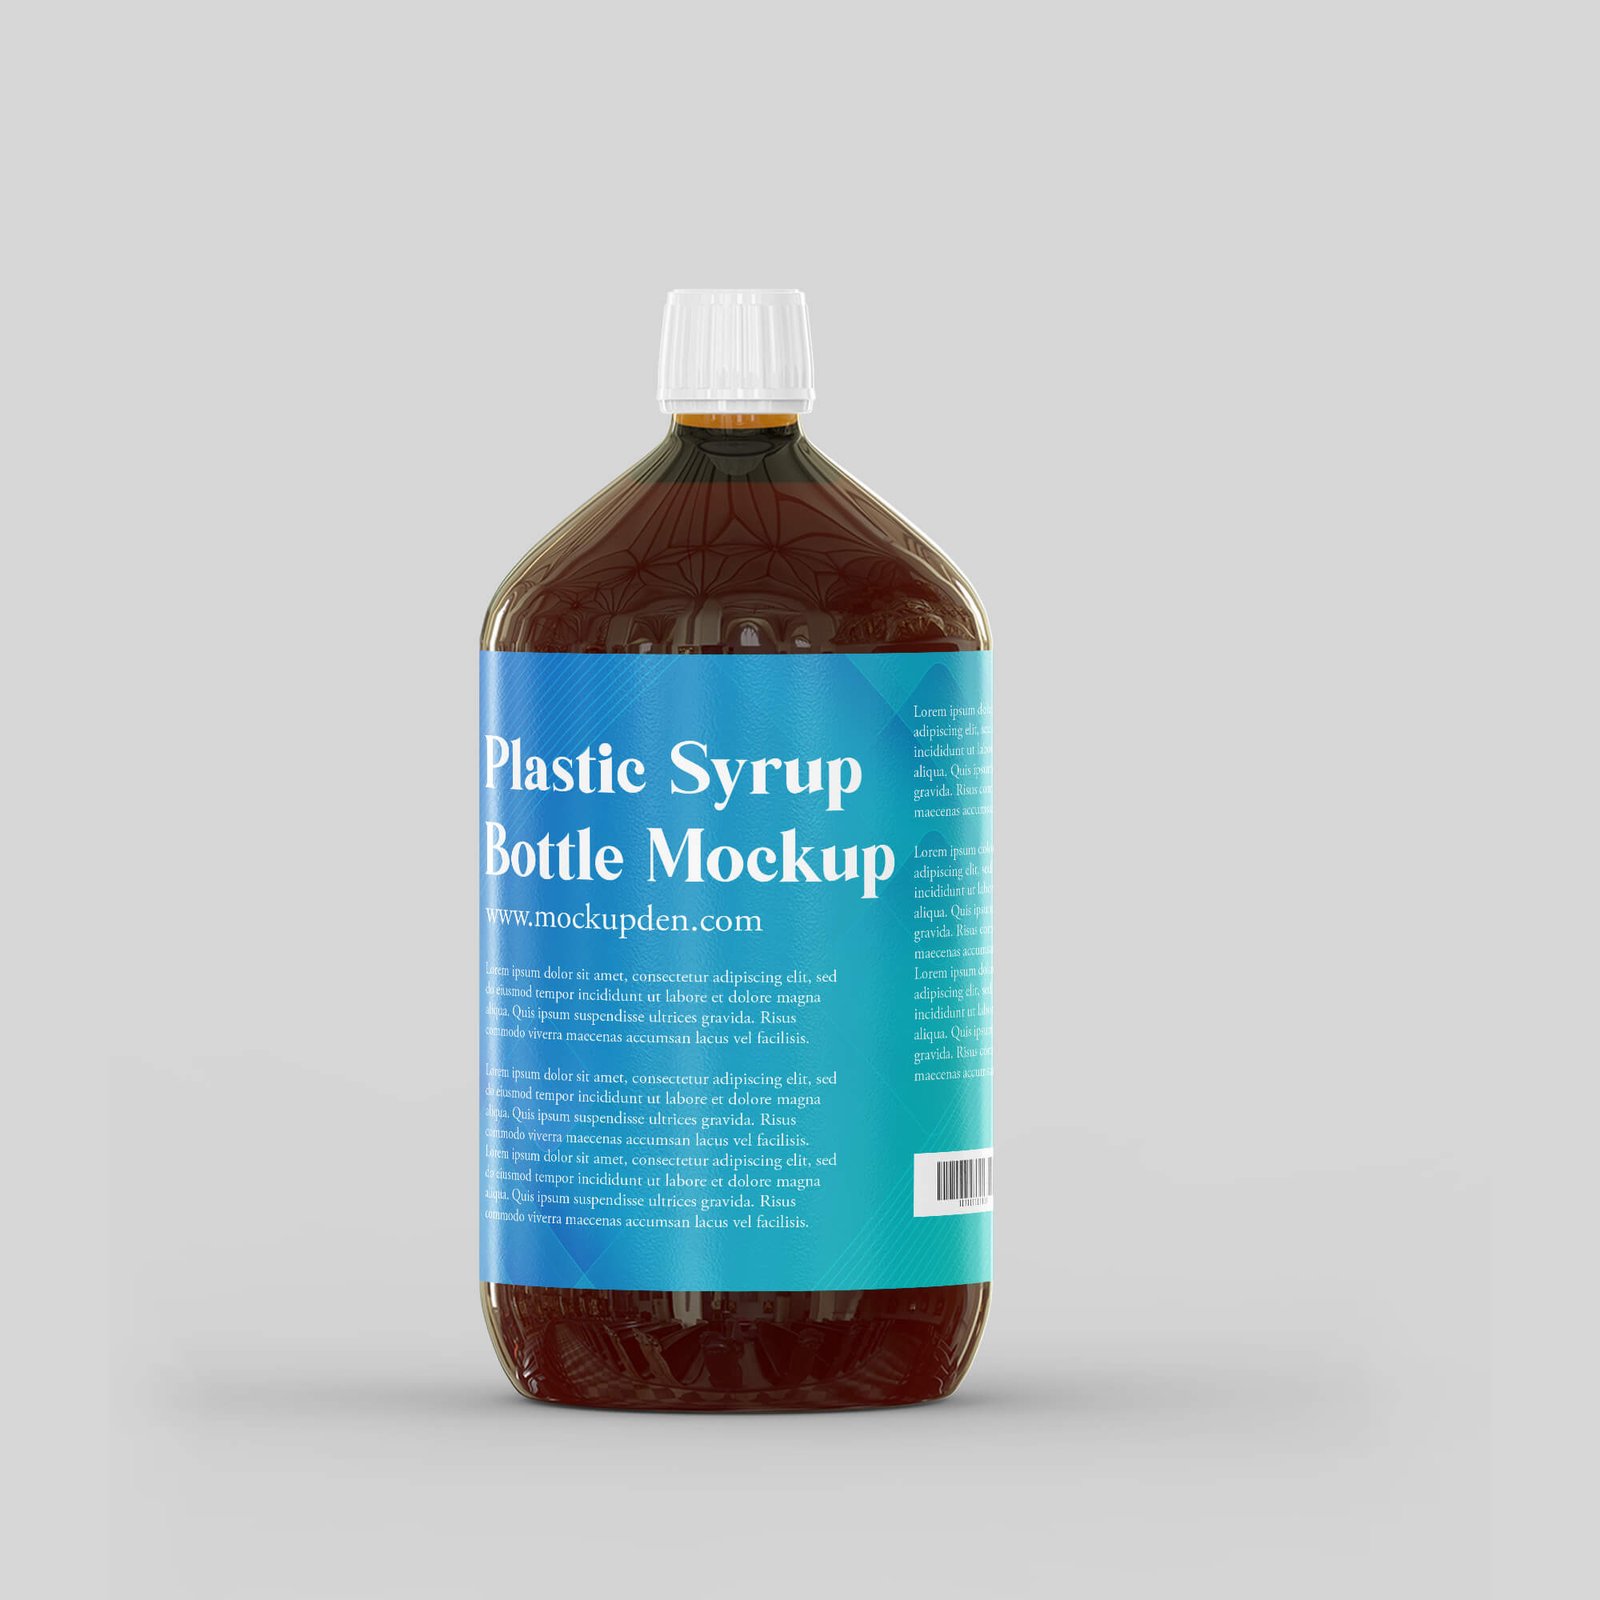 Design Free Plastic Syrup Bottle Mockup PSD Template